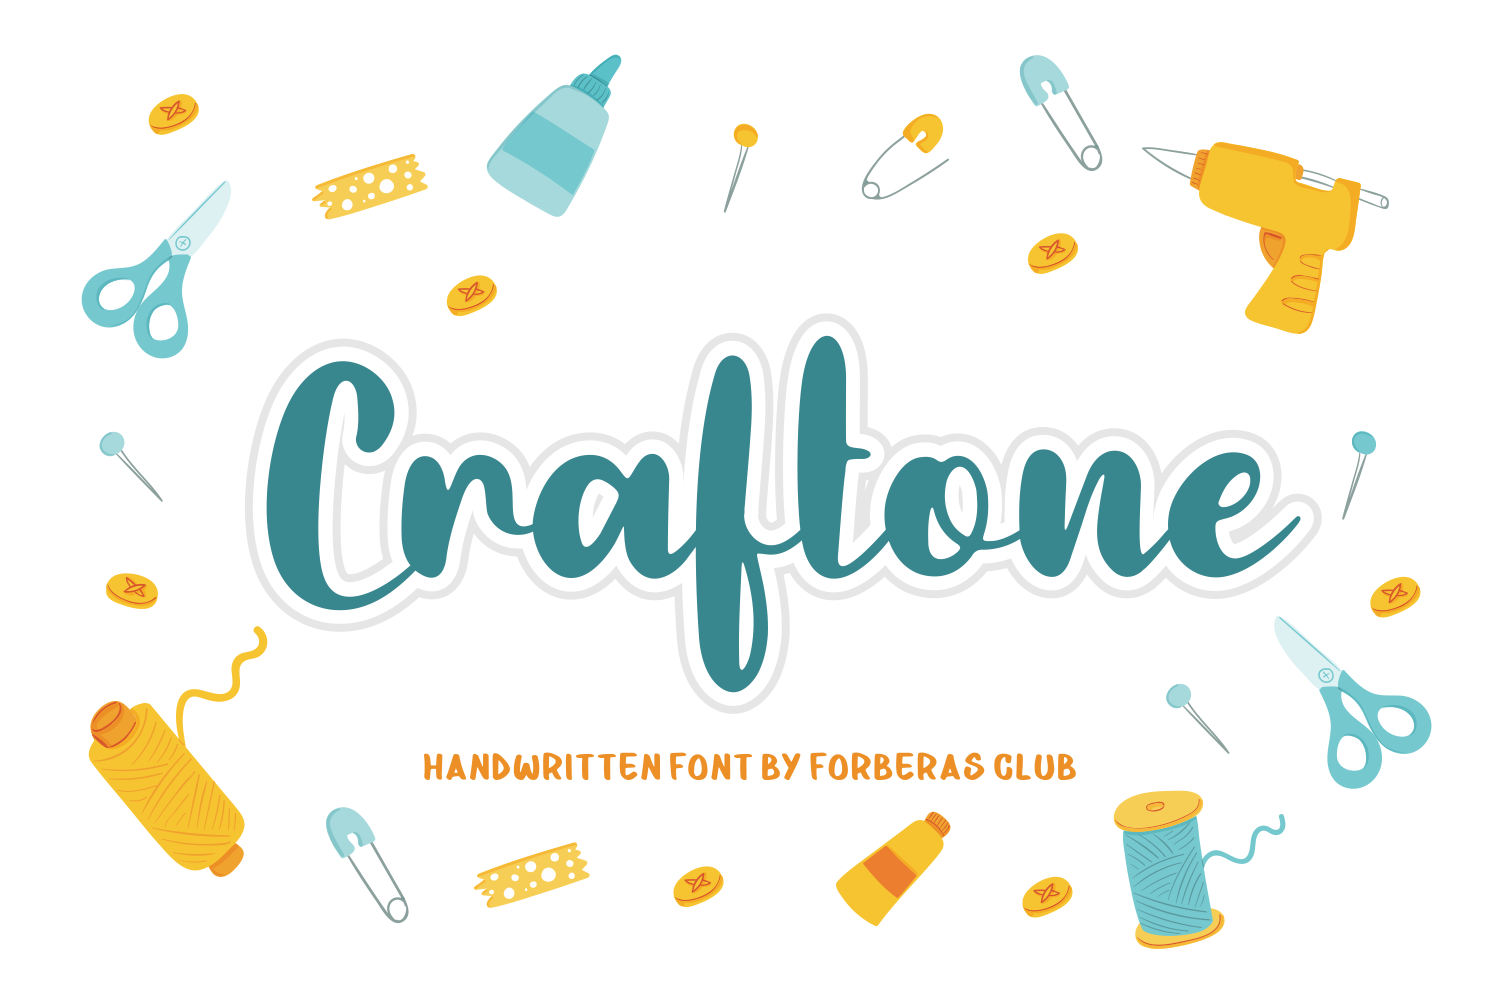 Craftone Free Font